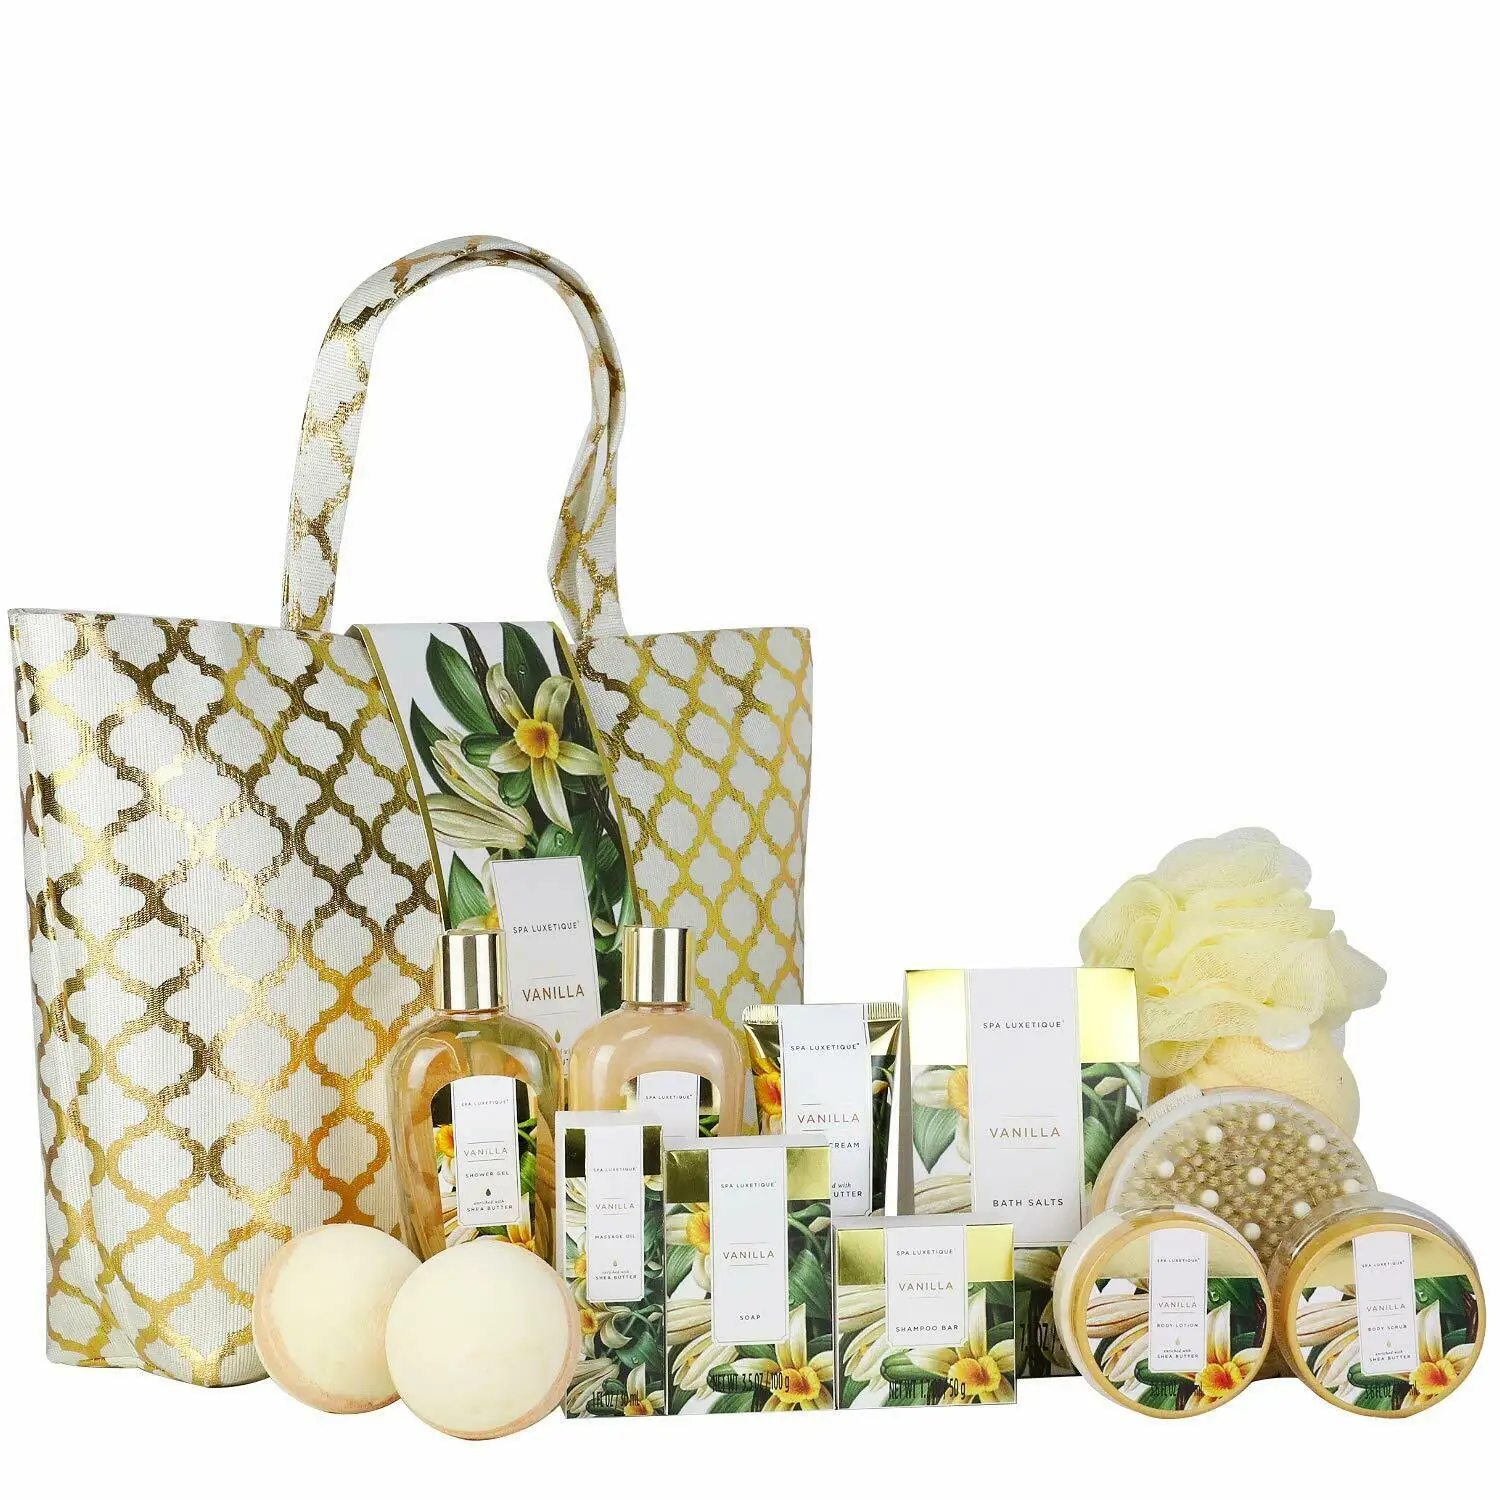 Bath & Body Gift Set for Women, 15pcs Vanilla Fragrance Spa Set in Weaved Gift Basket, Includes Bath Bombs, Massage Oil 1